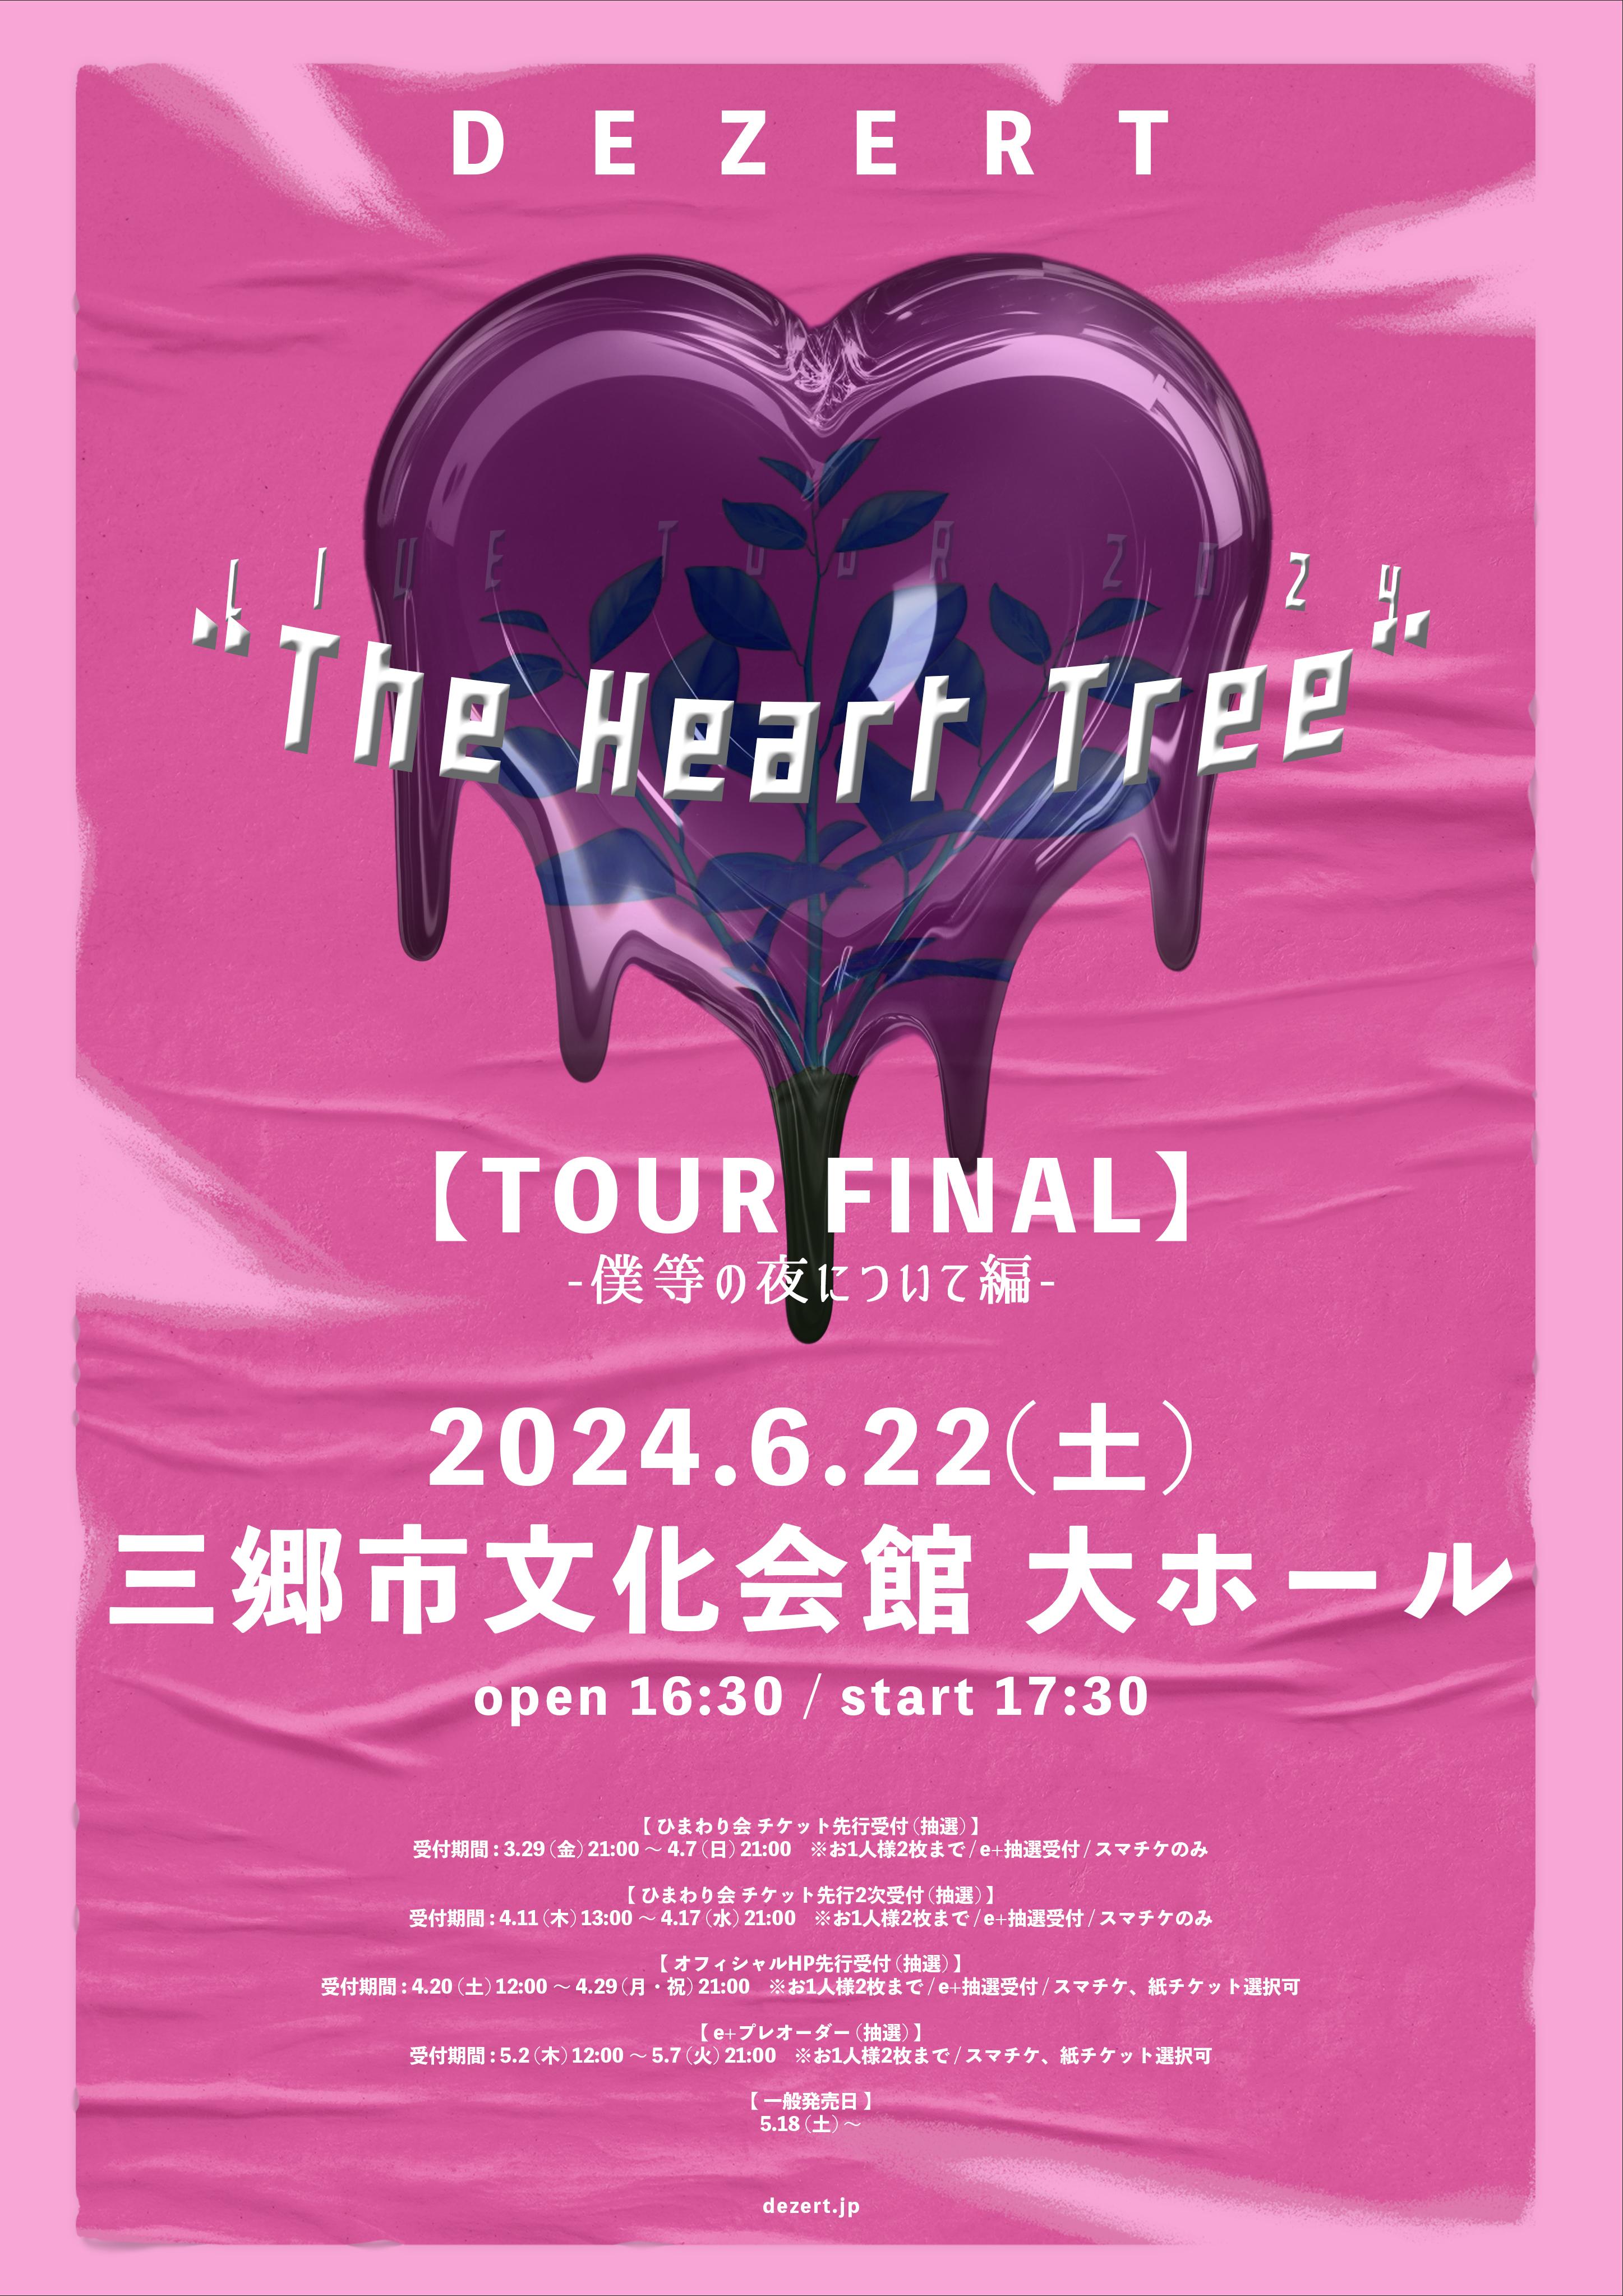 DEZERT LIVE TOUR 2024 “The Heart Tree” 【TOUR FINAL】 -僕等の夜について編-<br>オフィシャルHP先行＆三郷市文化会館先行 受付開始！